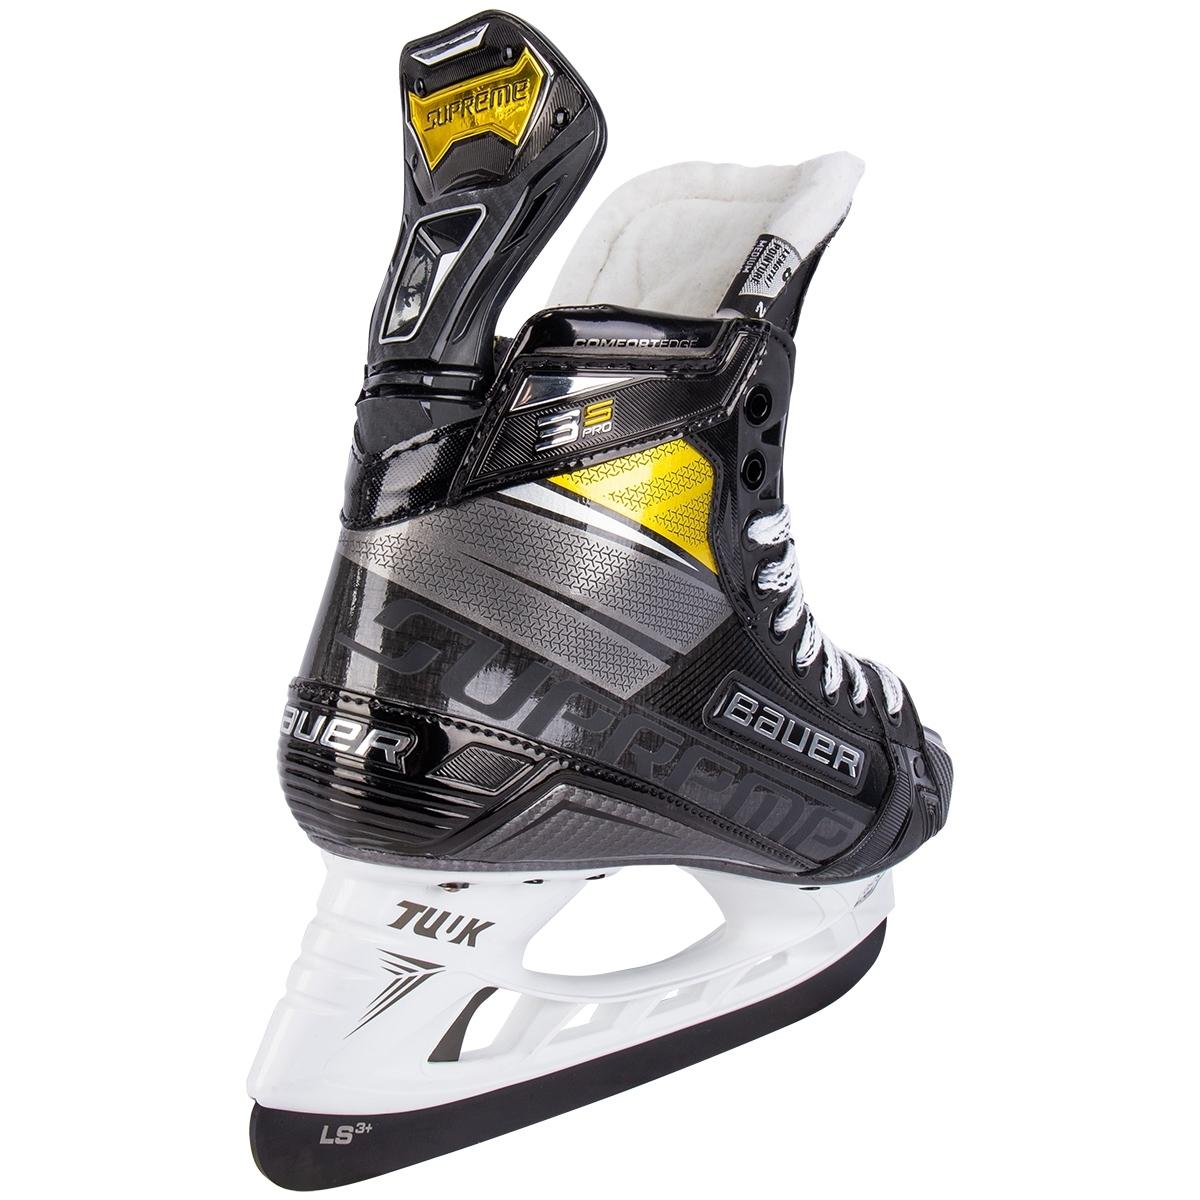 Bauer Supreme 3S Pro Jr. Hockey Skatesproduct zoom image #4